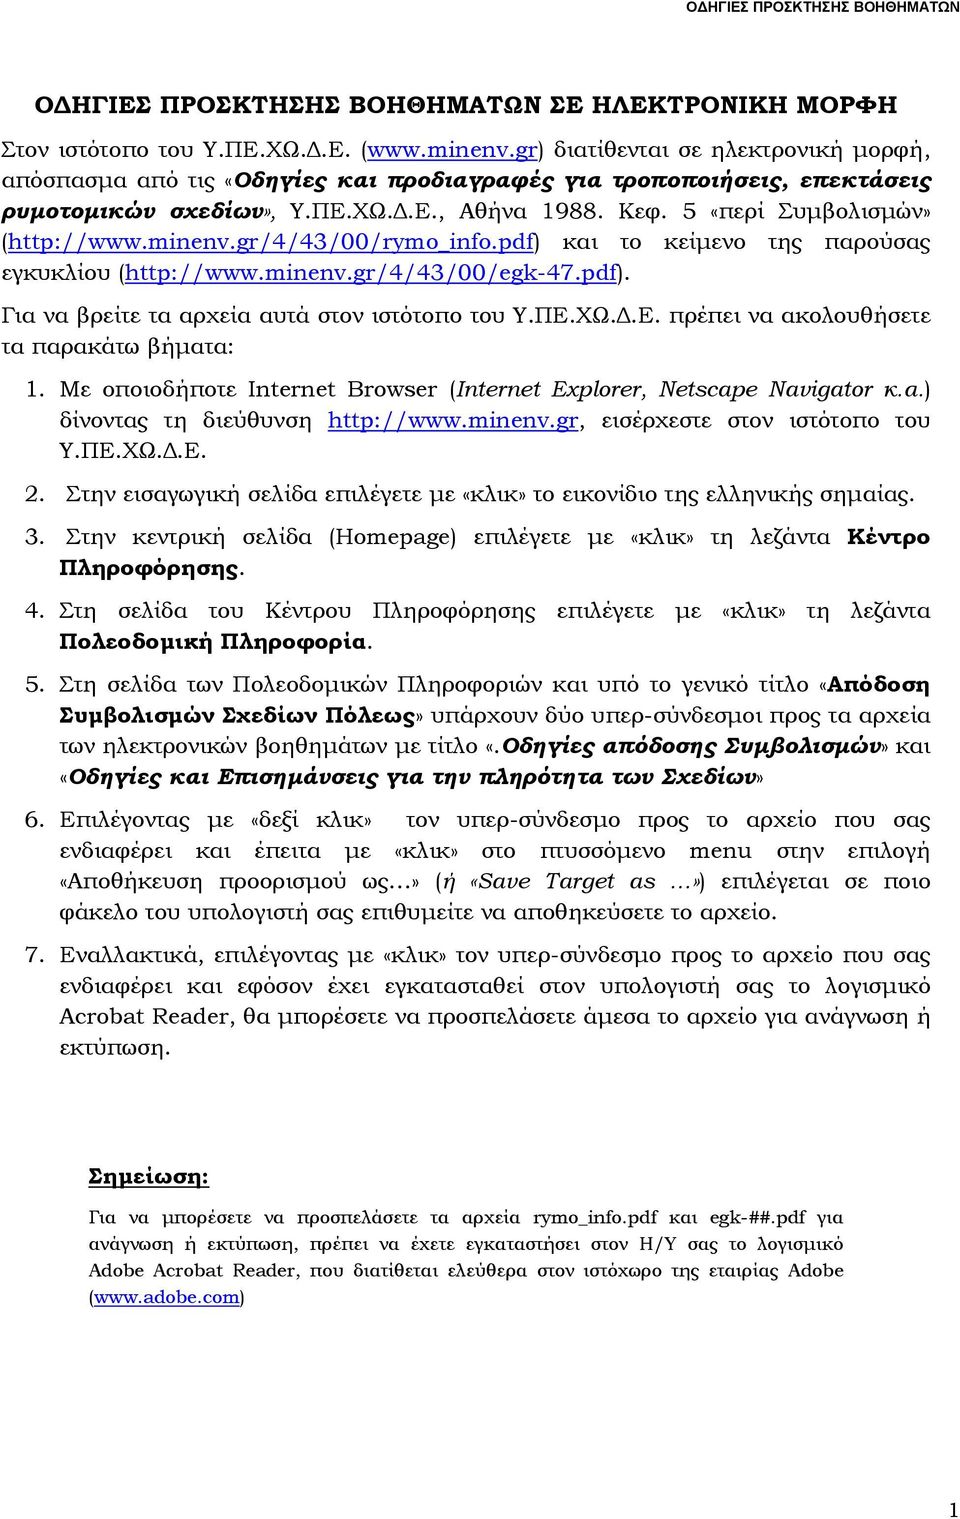 minenv.gr/4/43/00/rymo_info.pdf) και το κείµενο της παρούσας εγκυκλίου (http://www.minenv.gr/4/43/00/egk-47.pdf). Για να βρείτε τα αρχεία αυτά στον ιστότοπο του Υ.ΠΕ.